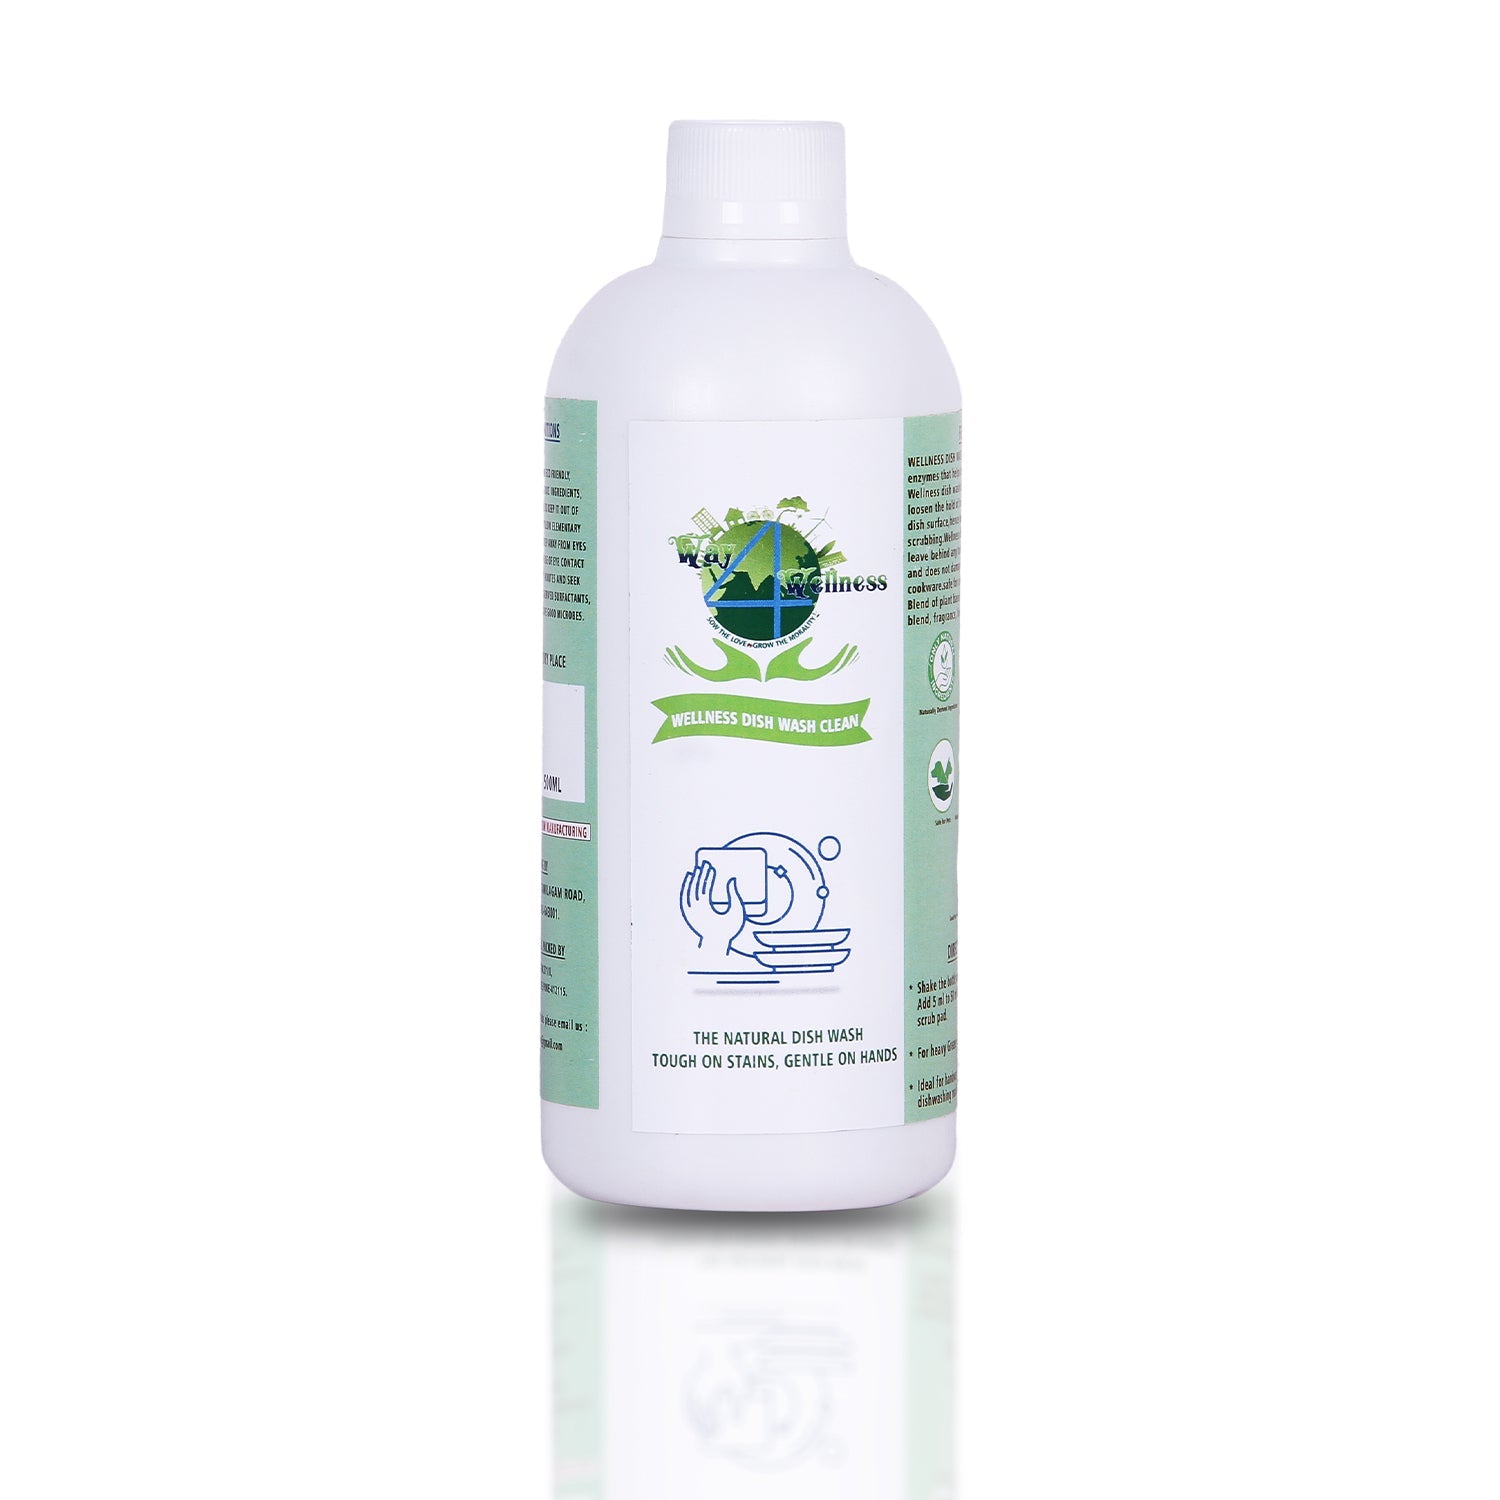 Wellness Natural Dish wash Liquid | Natural Plant Based Skin friendly Dish washing Liquid | Eco-Friendly, Non-Toxic, Biodegradable - (Pack of 2 -500ML each )